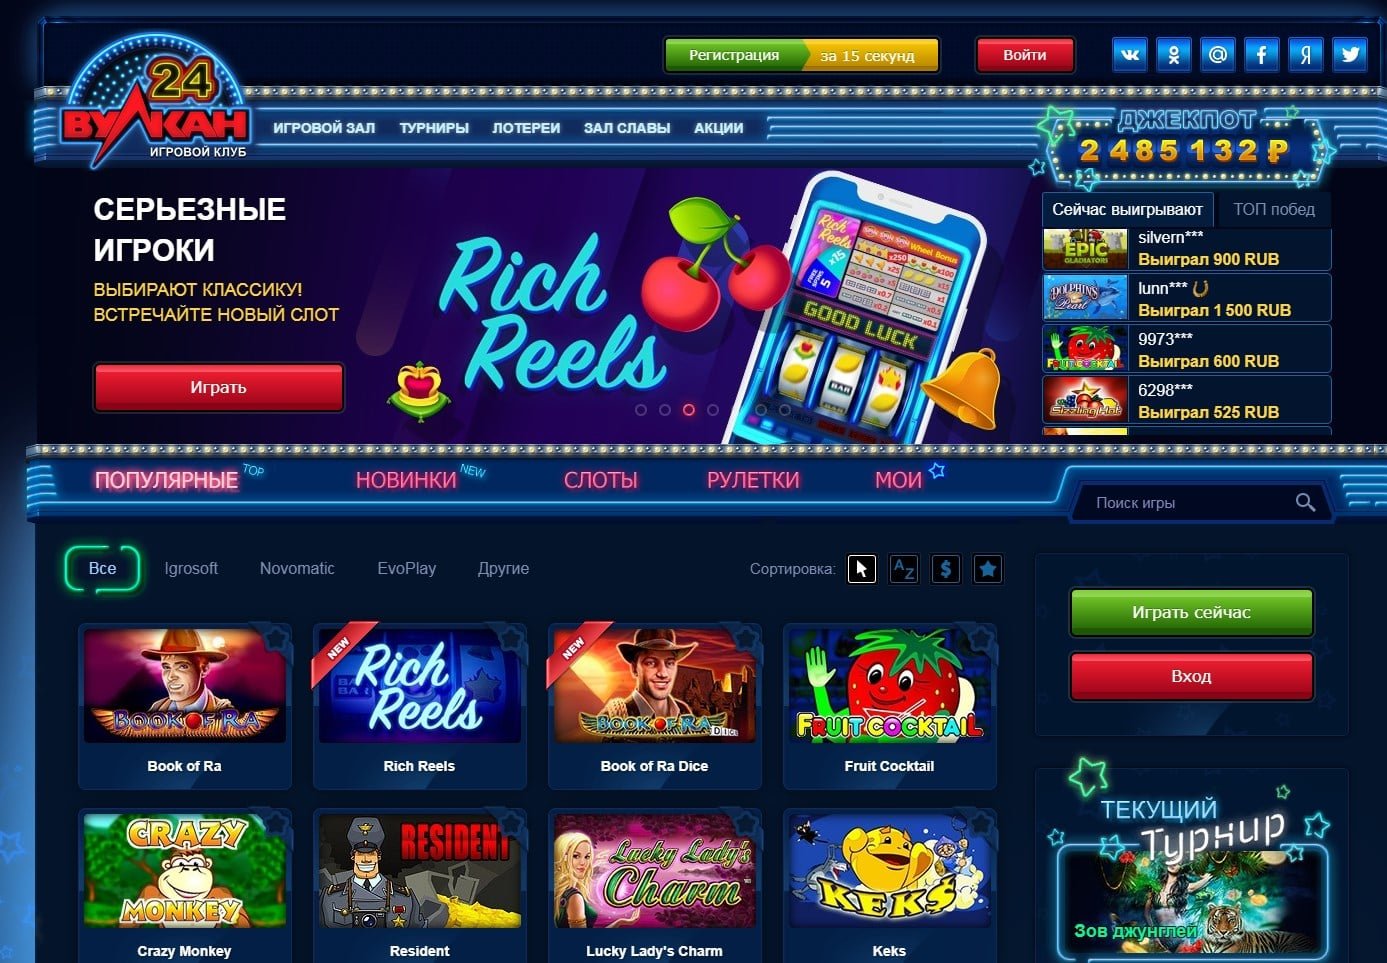 Казино 24 онлайн официальный сайт play fortuna casino код